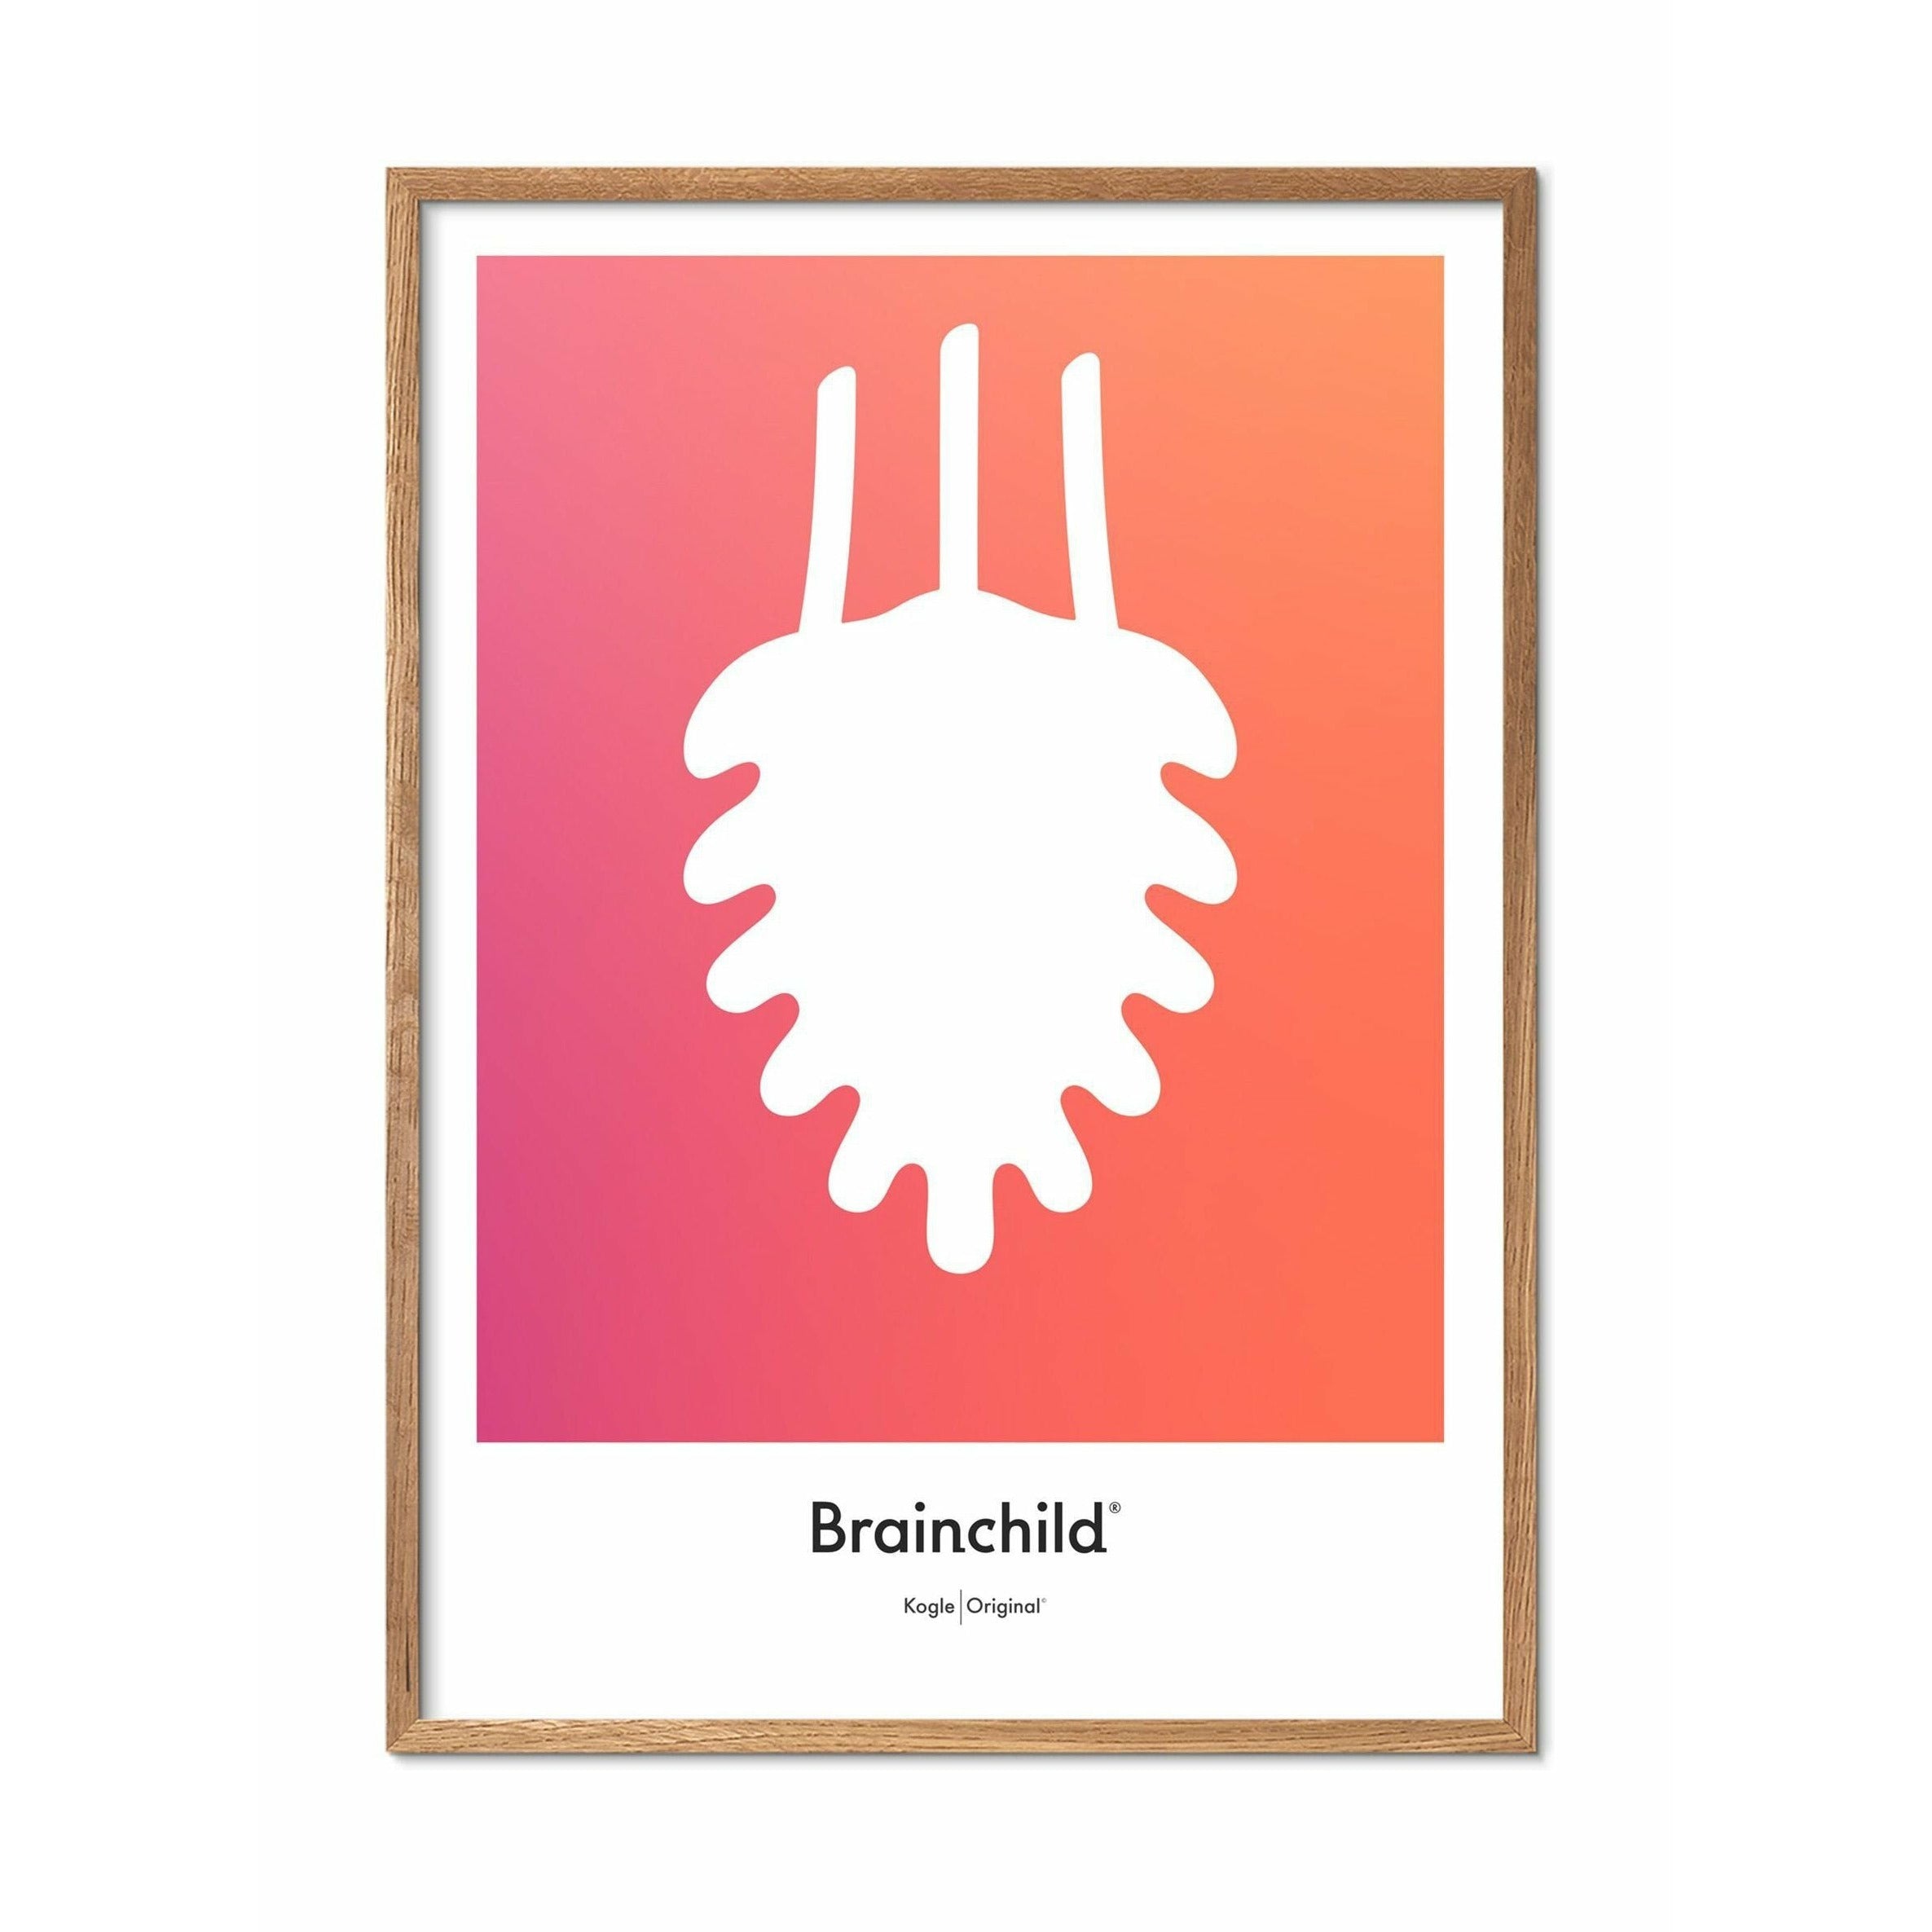 Brainchild Pine Cone Design Icon Poster, Frame Made Of Light Wood 30x40 Cm, Orange